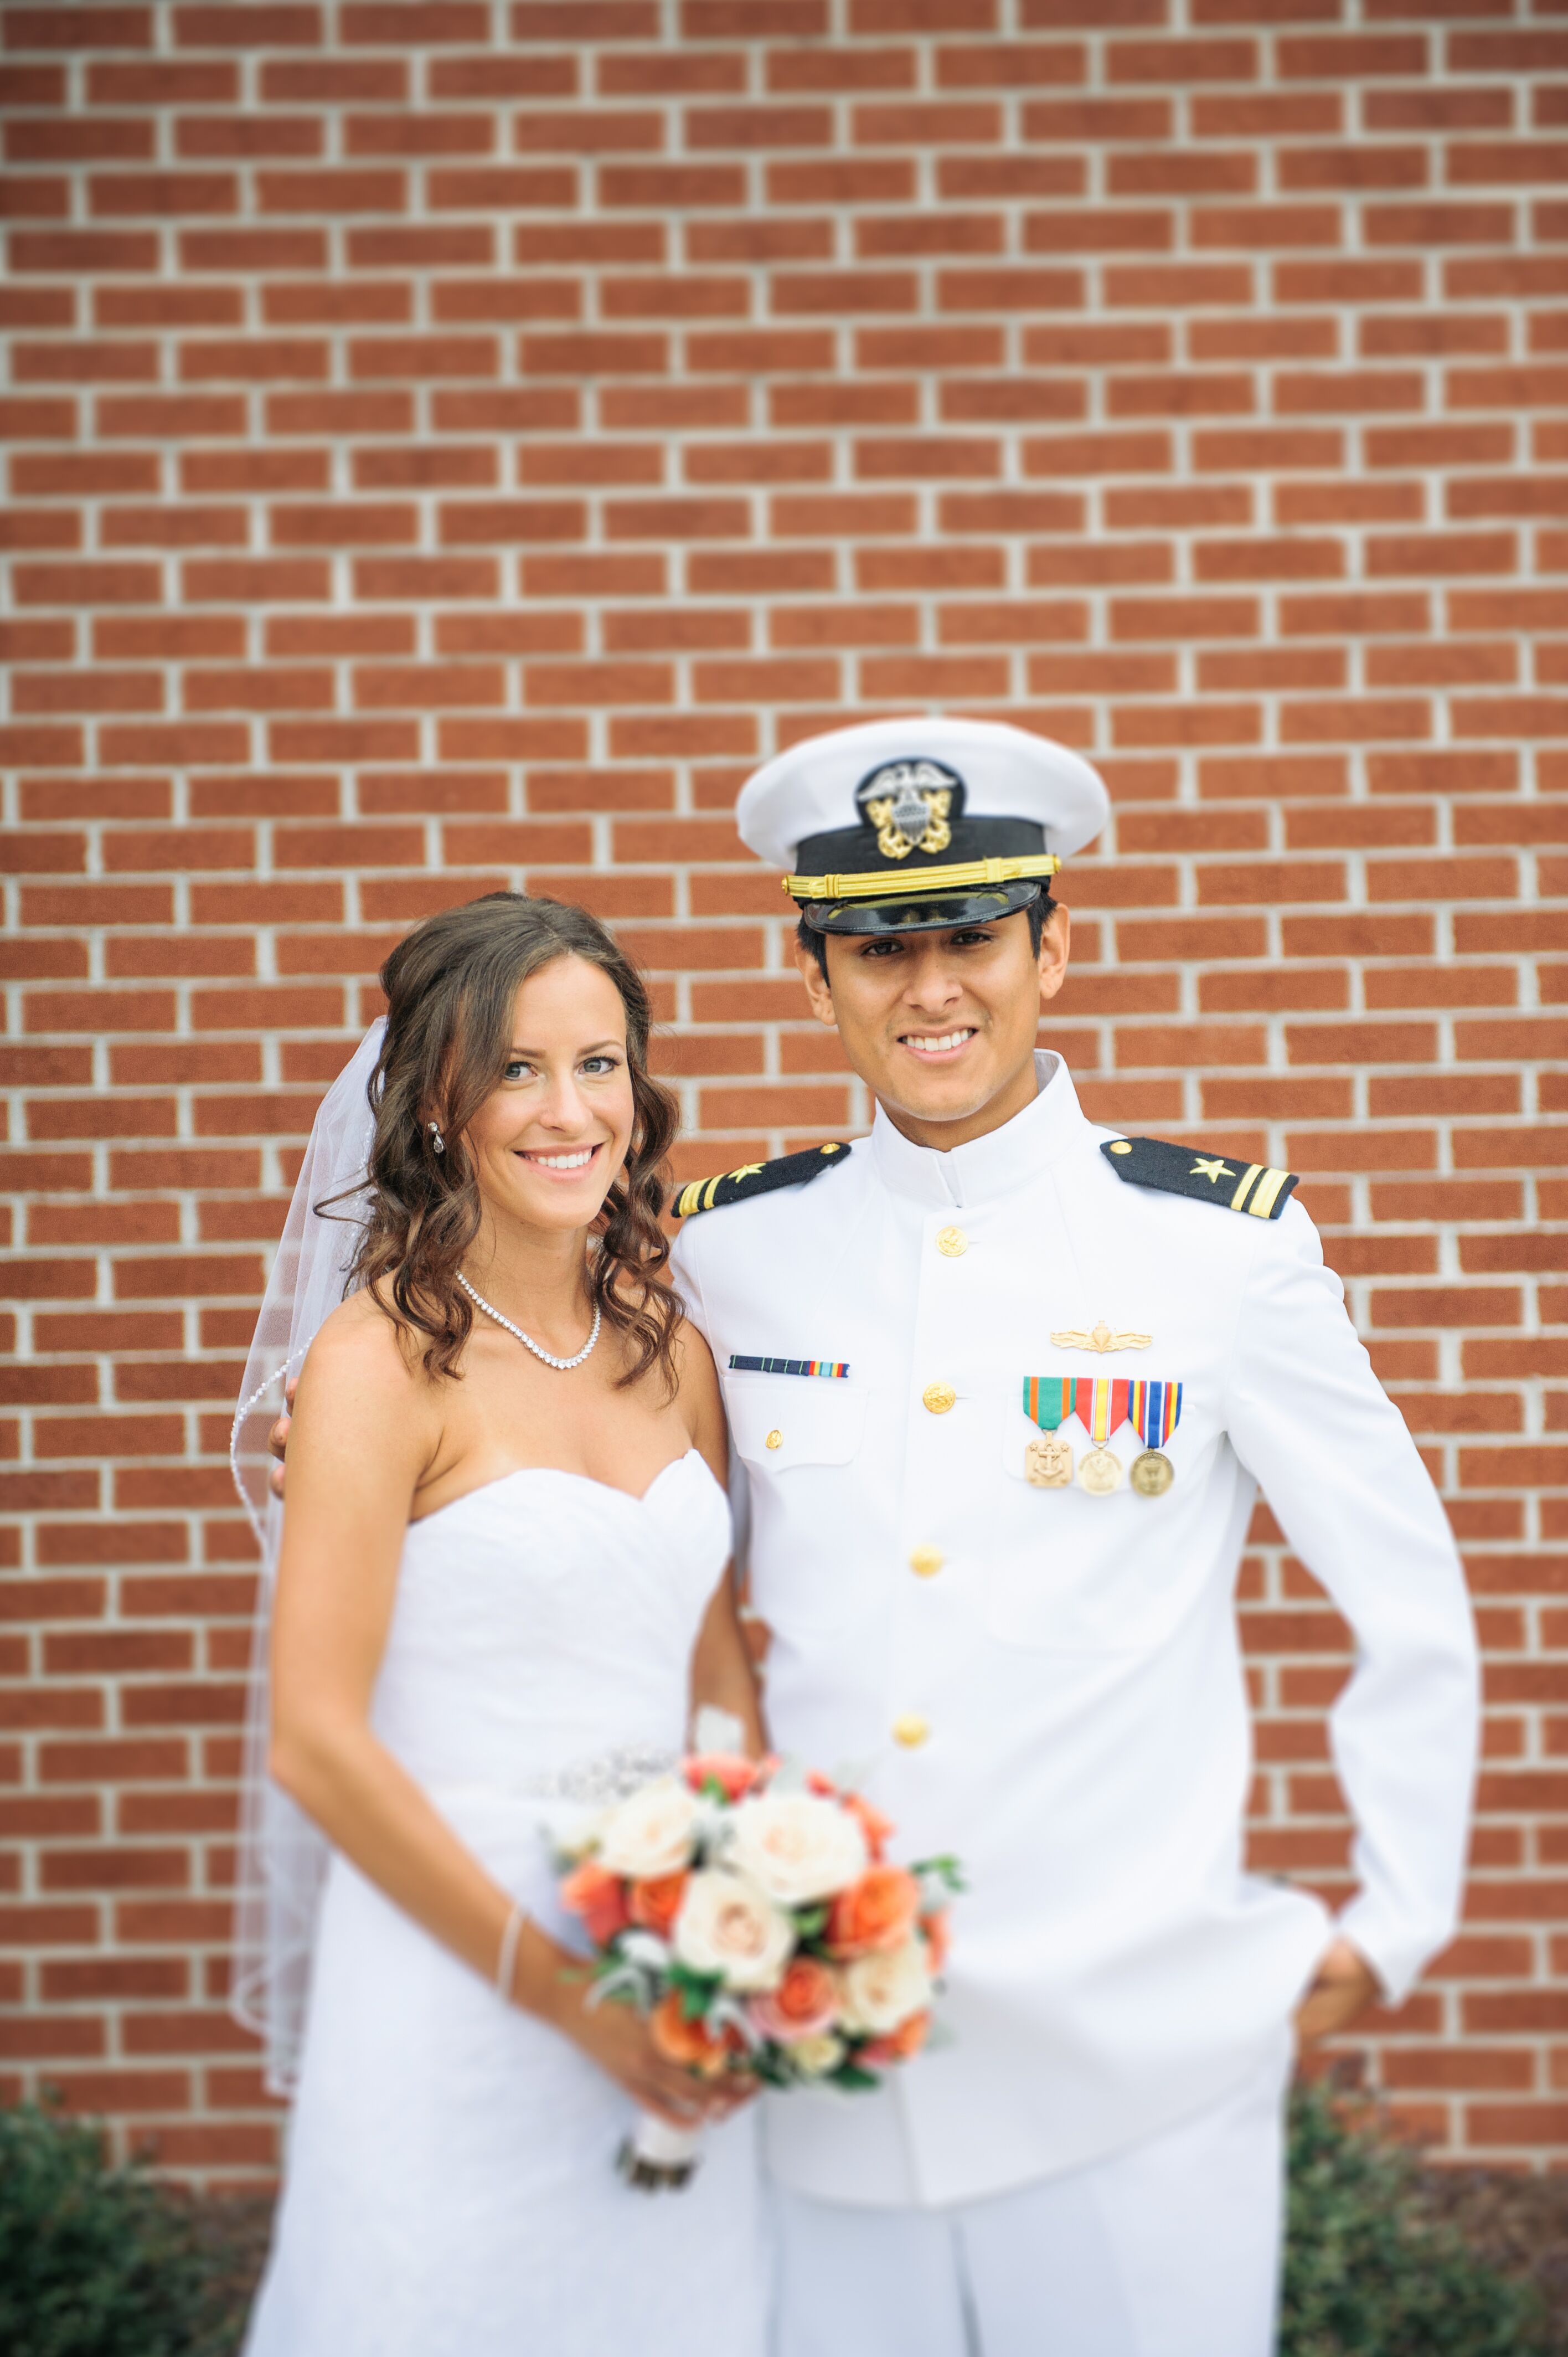 navy officer wedding uniforms